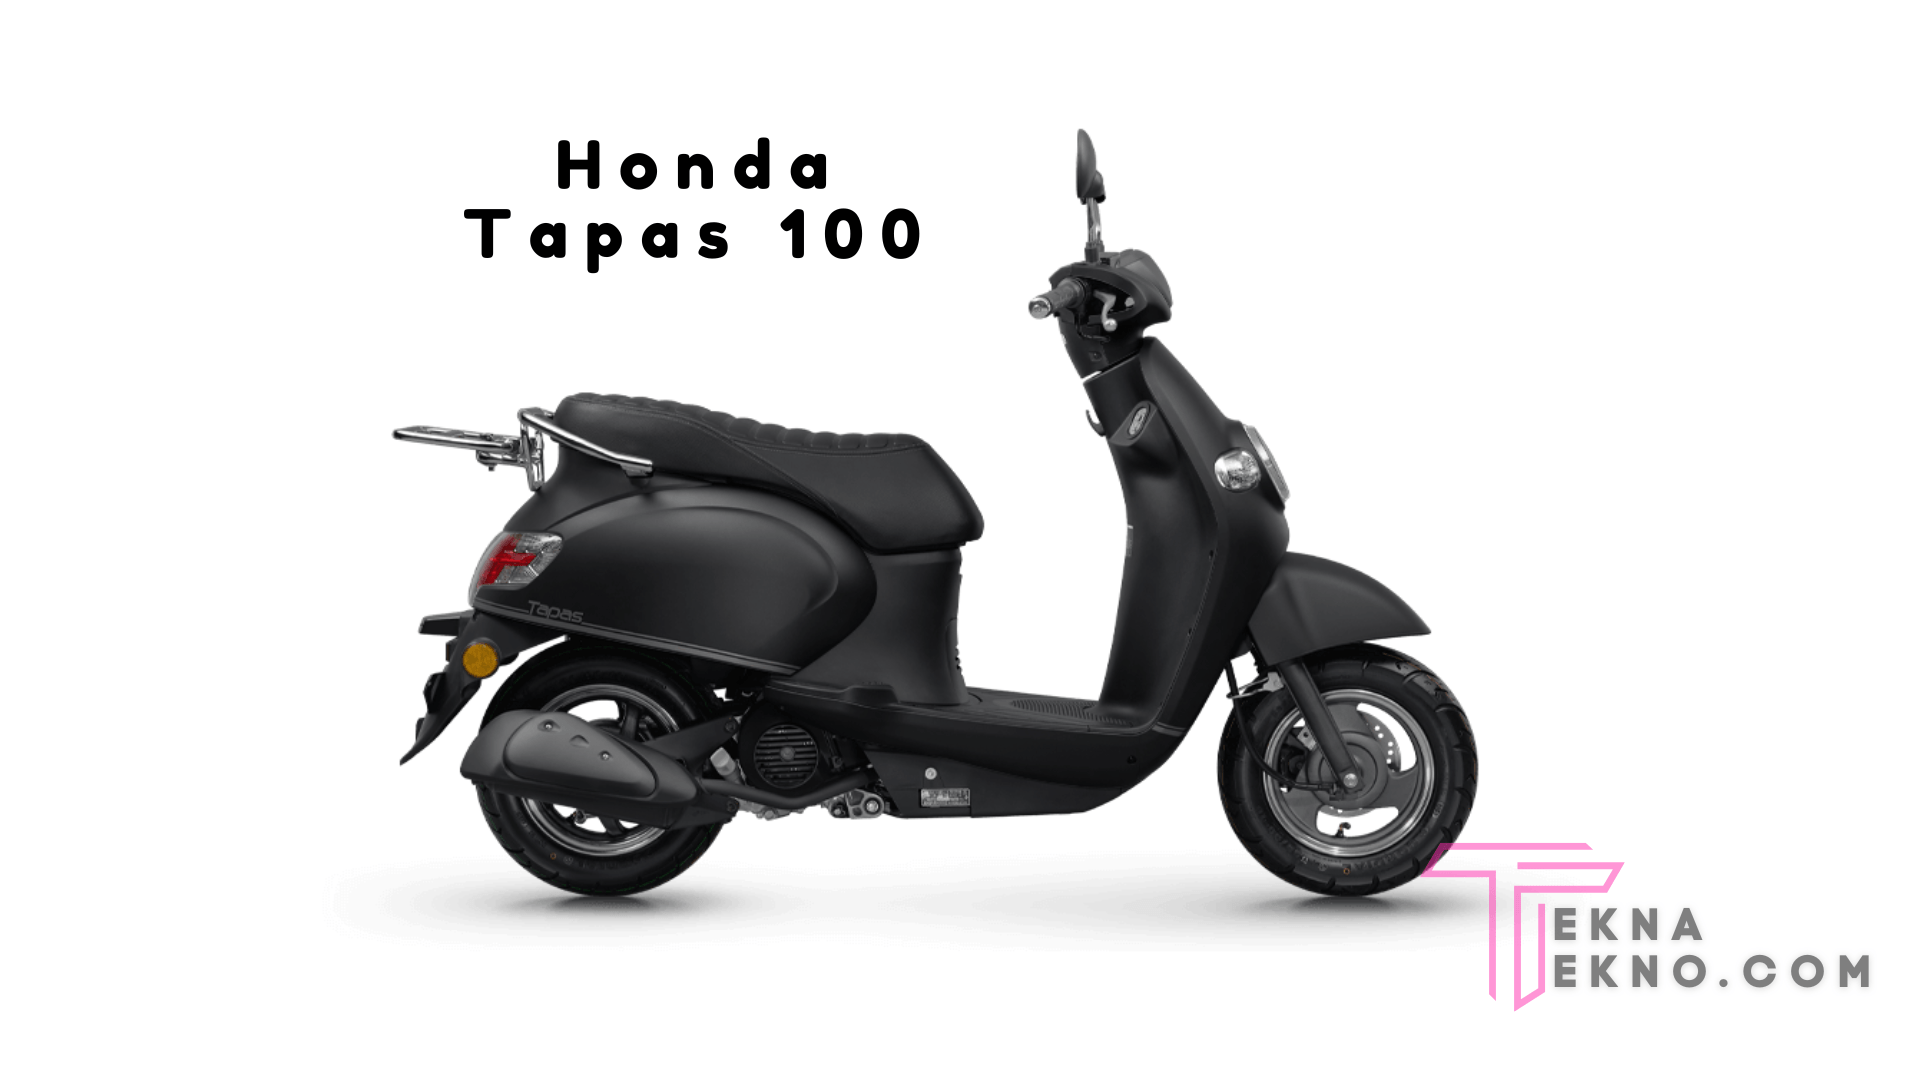 Desain Honda Tapas 100